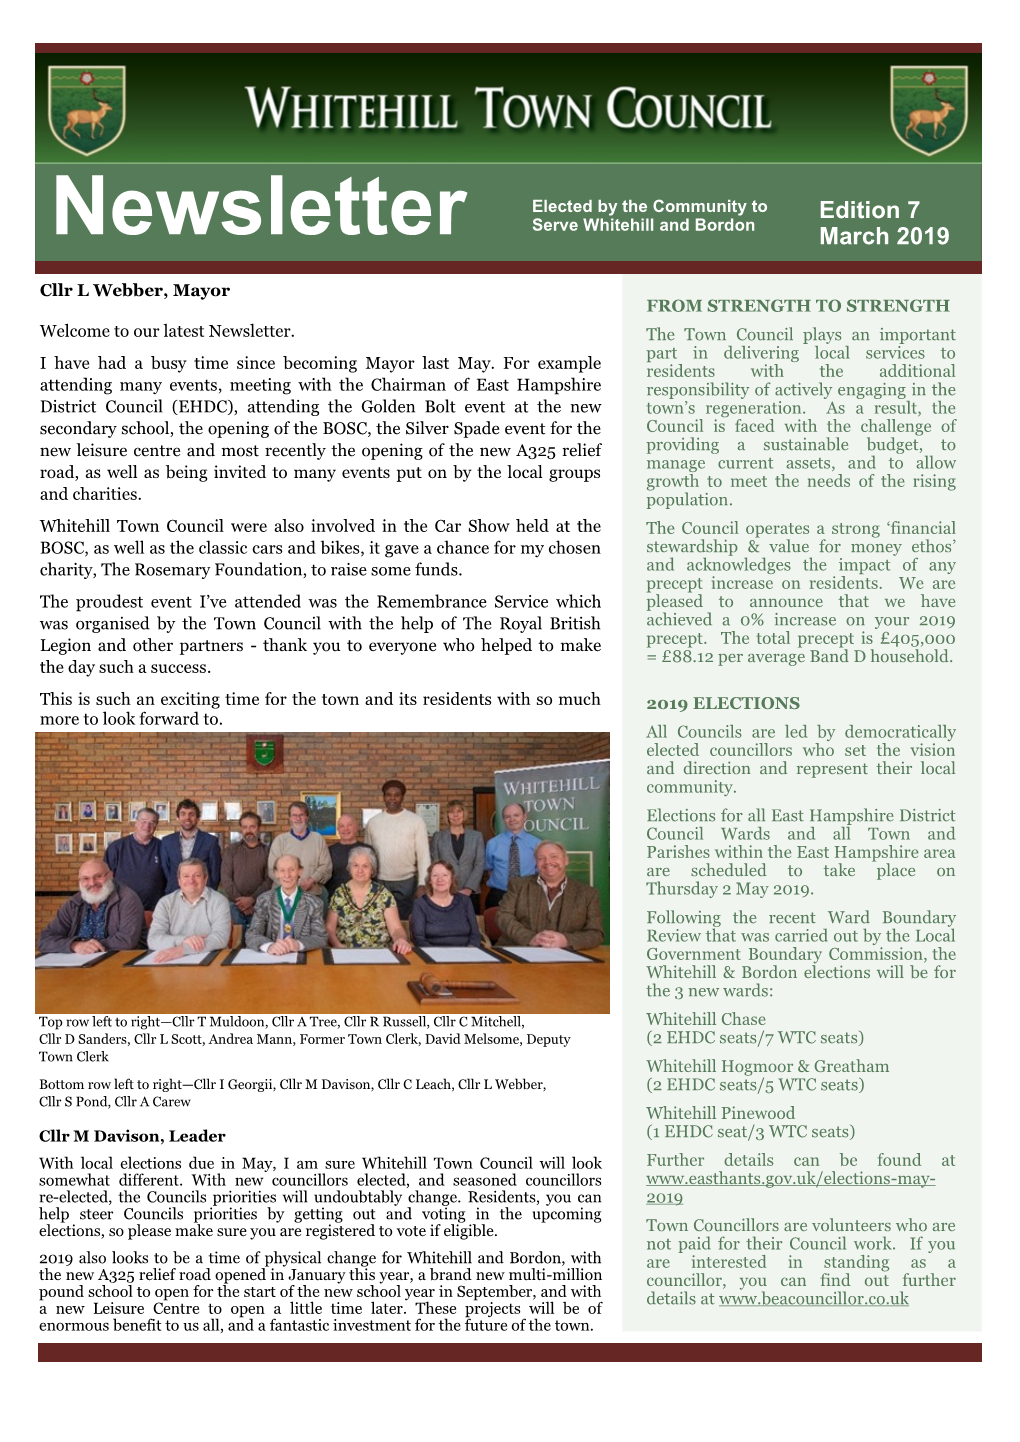 Newsletter Serve Whitehill and Bordon March 2019